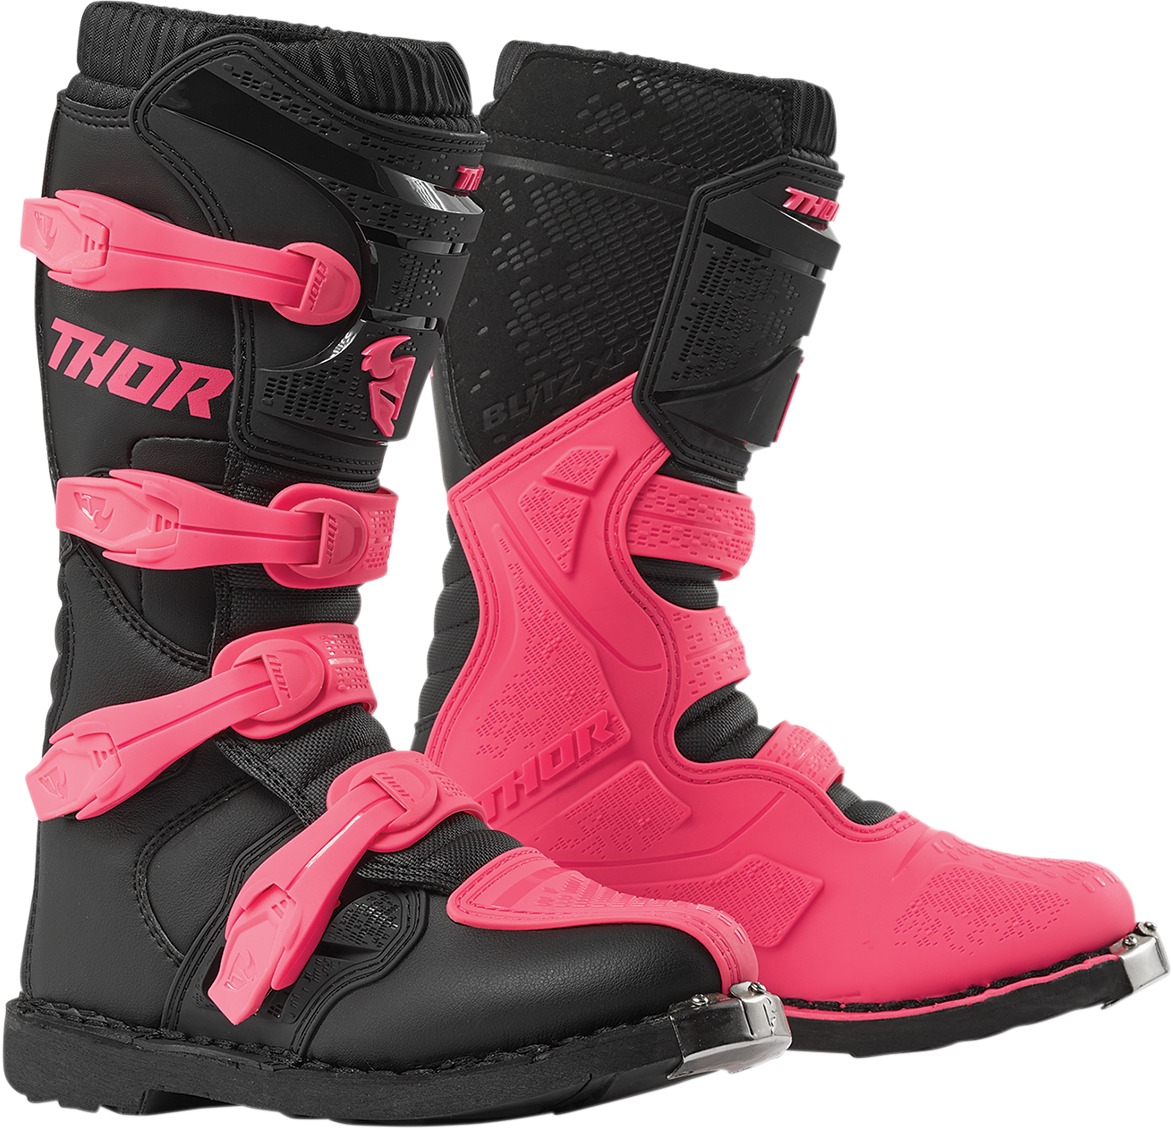 Blitz XP Dirt Bike Boots - Black & Pink Women's Size 6 - Click Image to Close